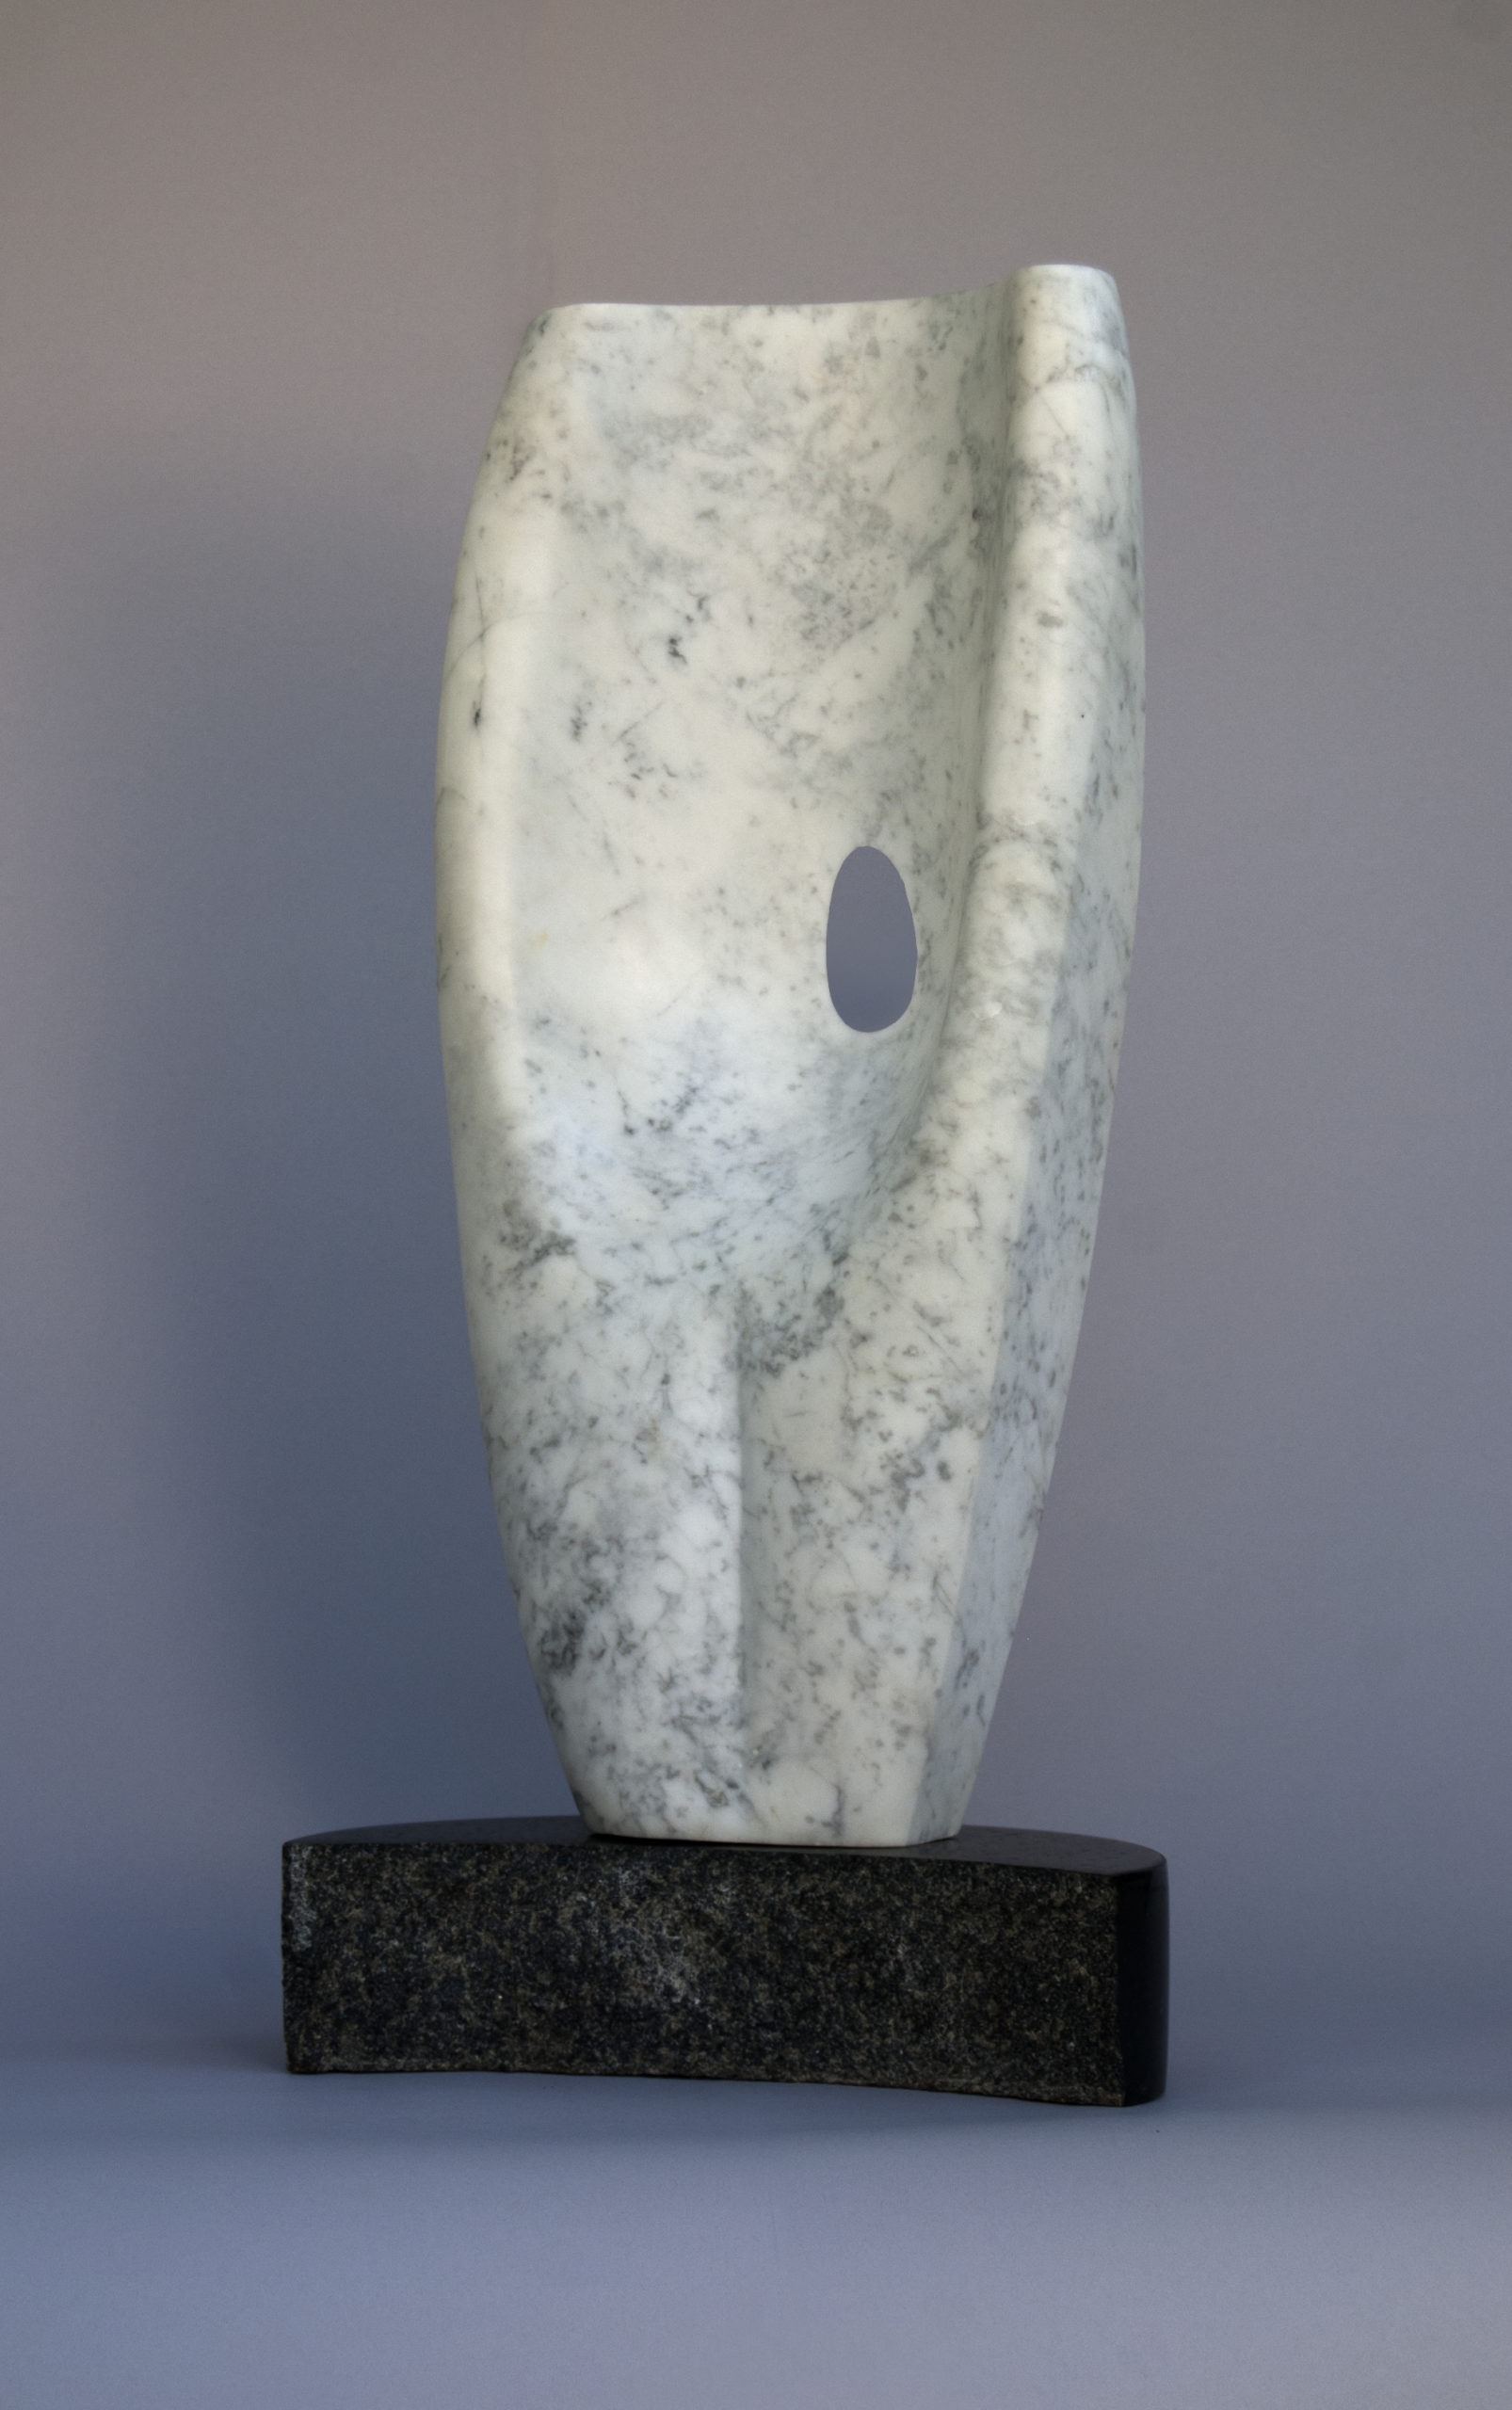 Ken Barnes, “Corona”, 24” X 12” X 5”, 2013, white marble